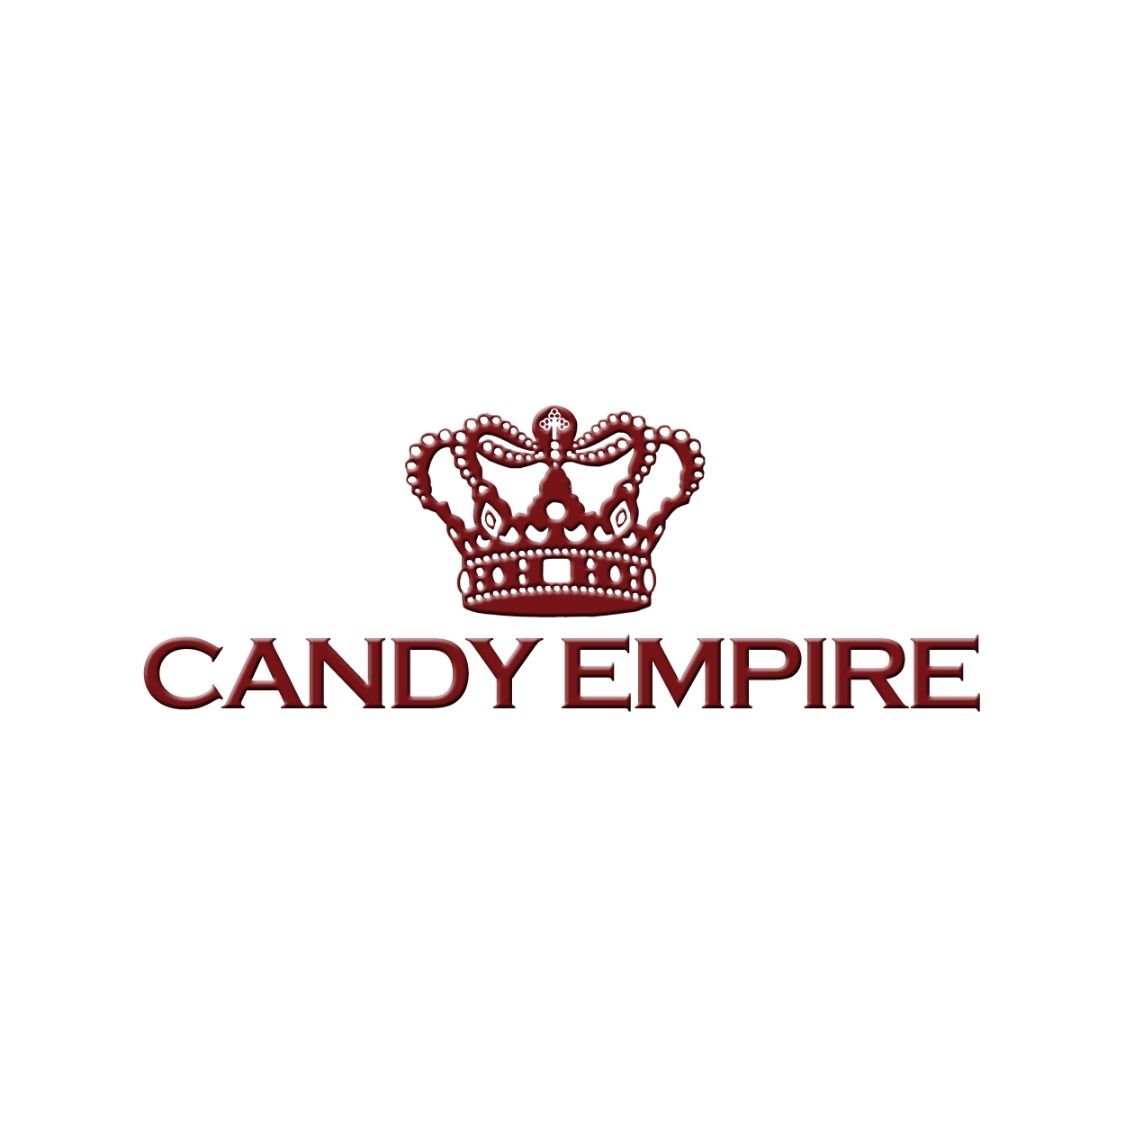 Candy Empire Logo.jpg